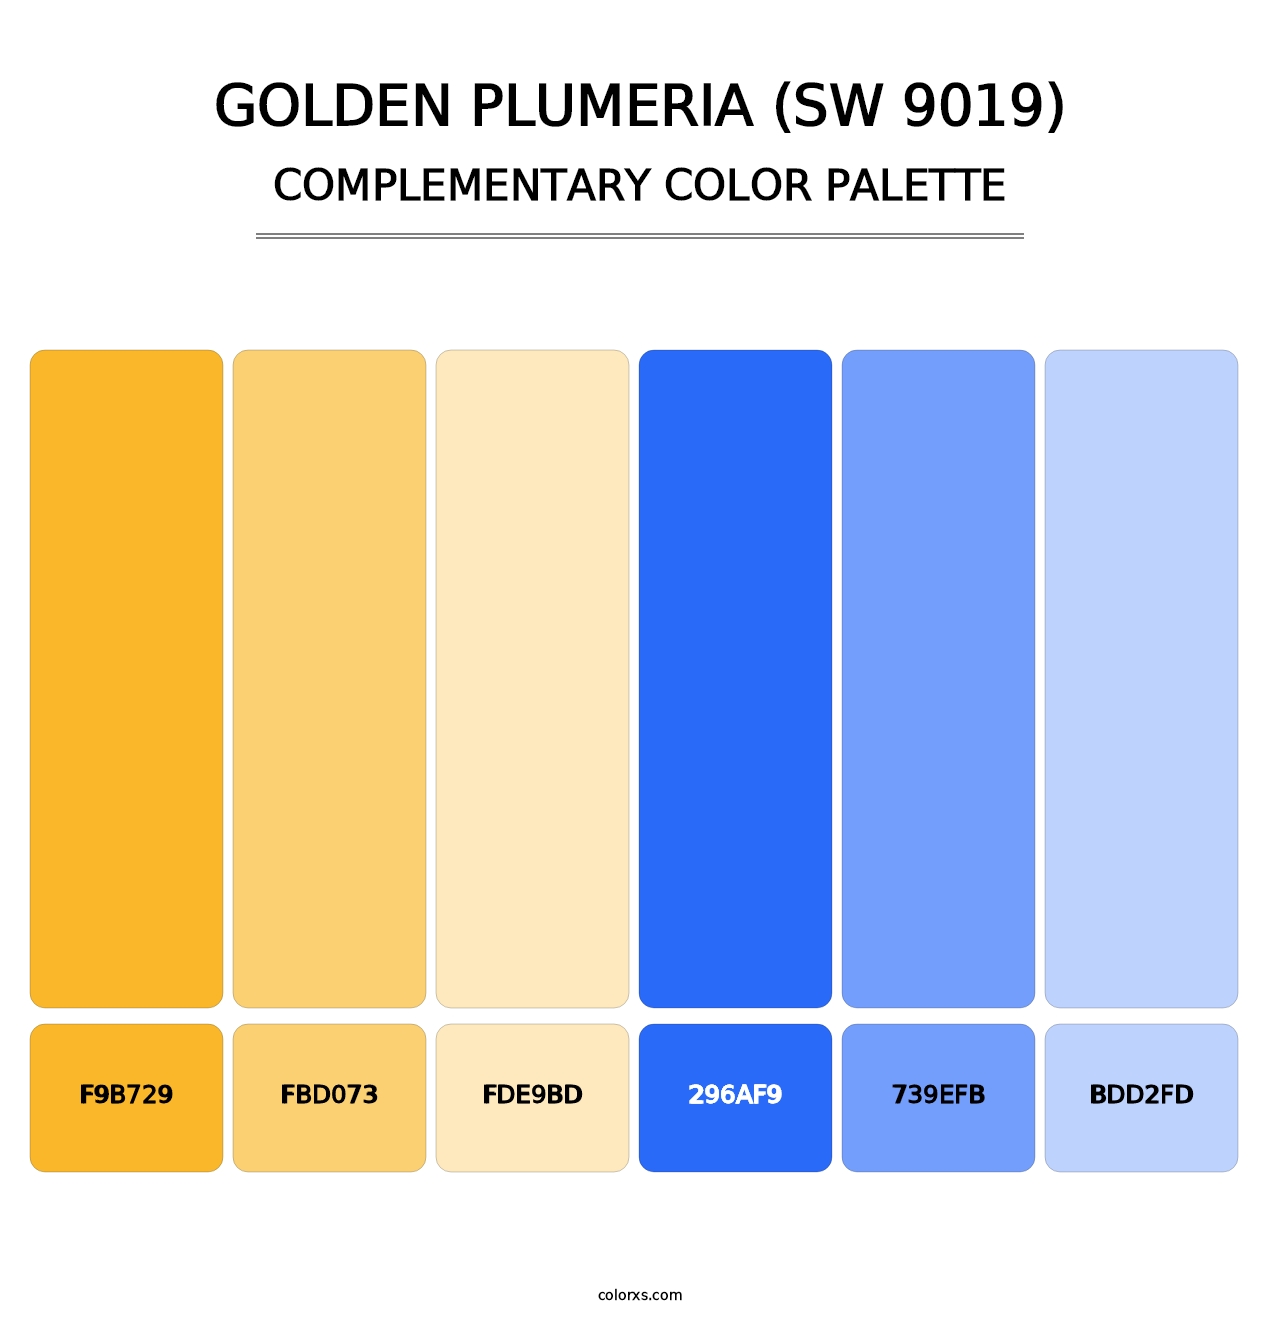 Golden Plumeria (SW 9019) - Complementary Color Palette